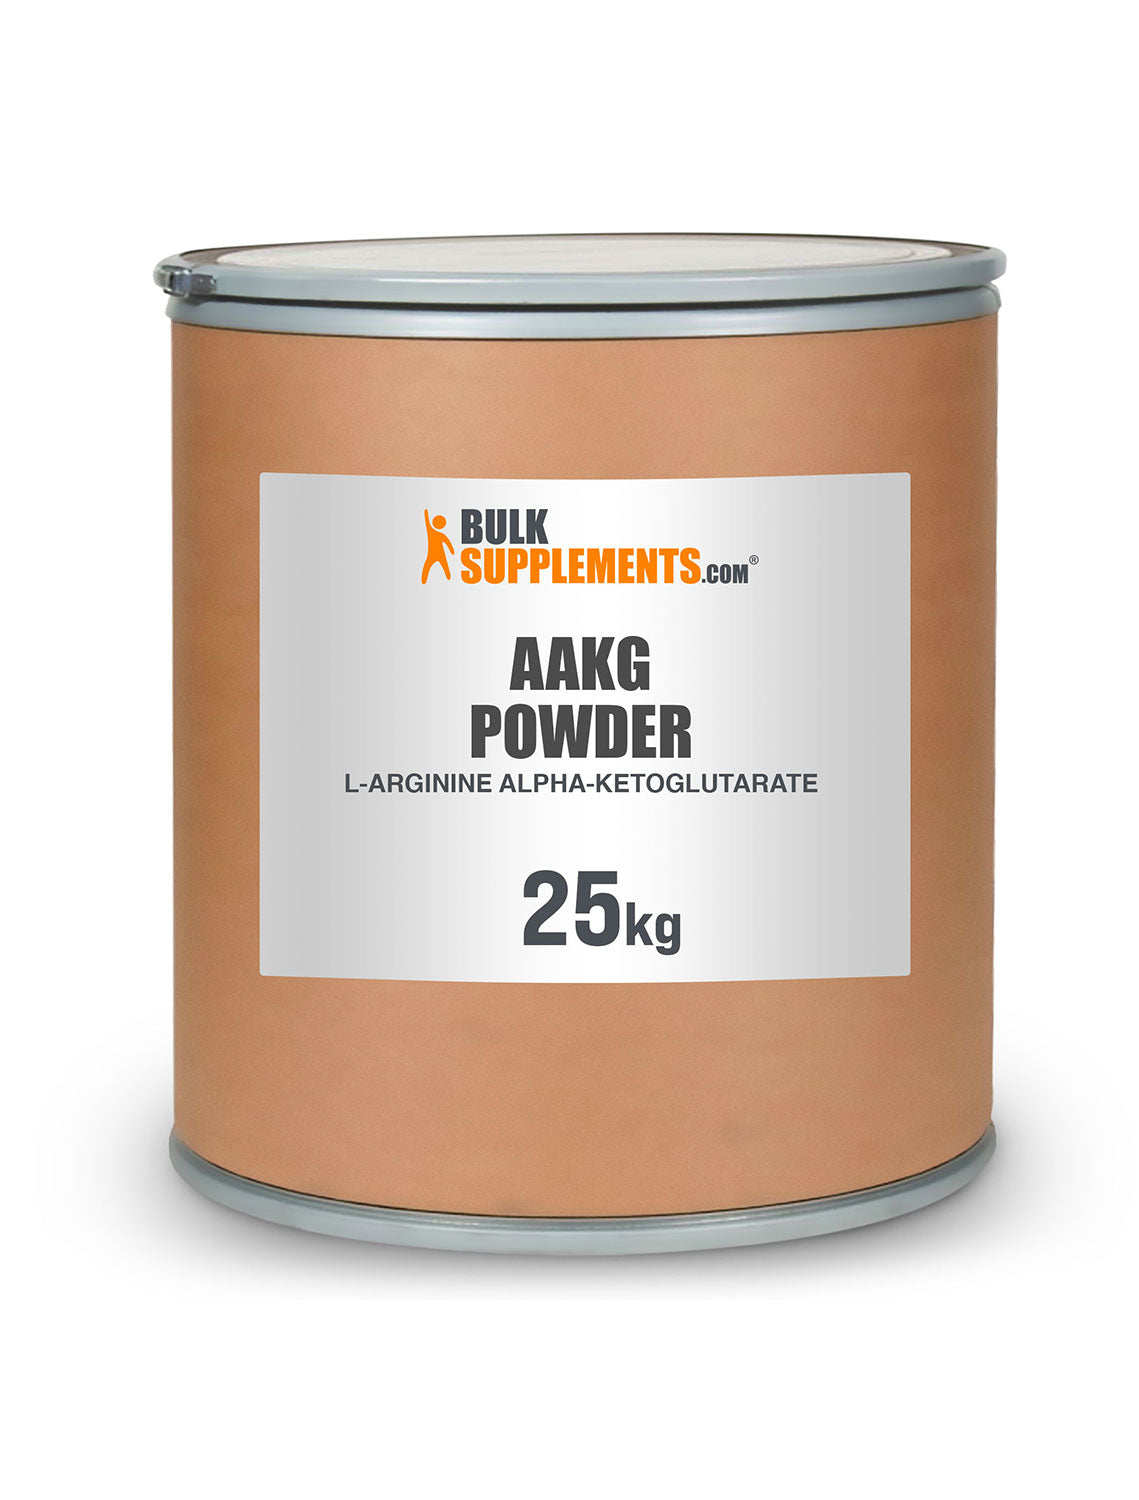 AAKG Powder Bulk Can 25kg